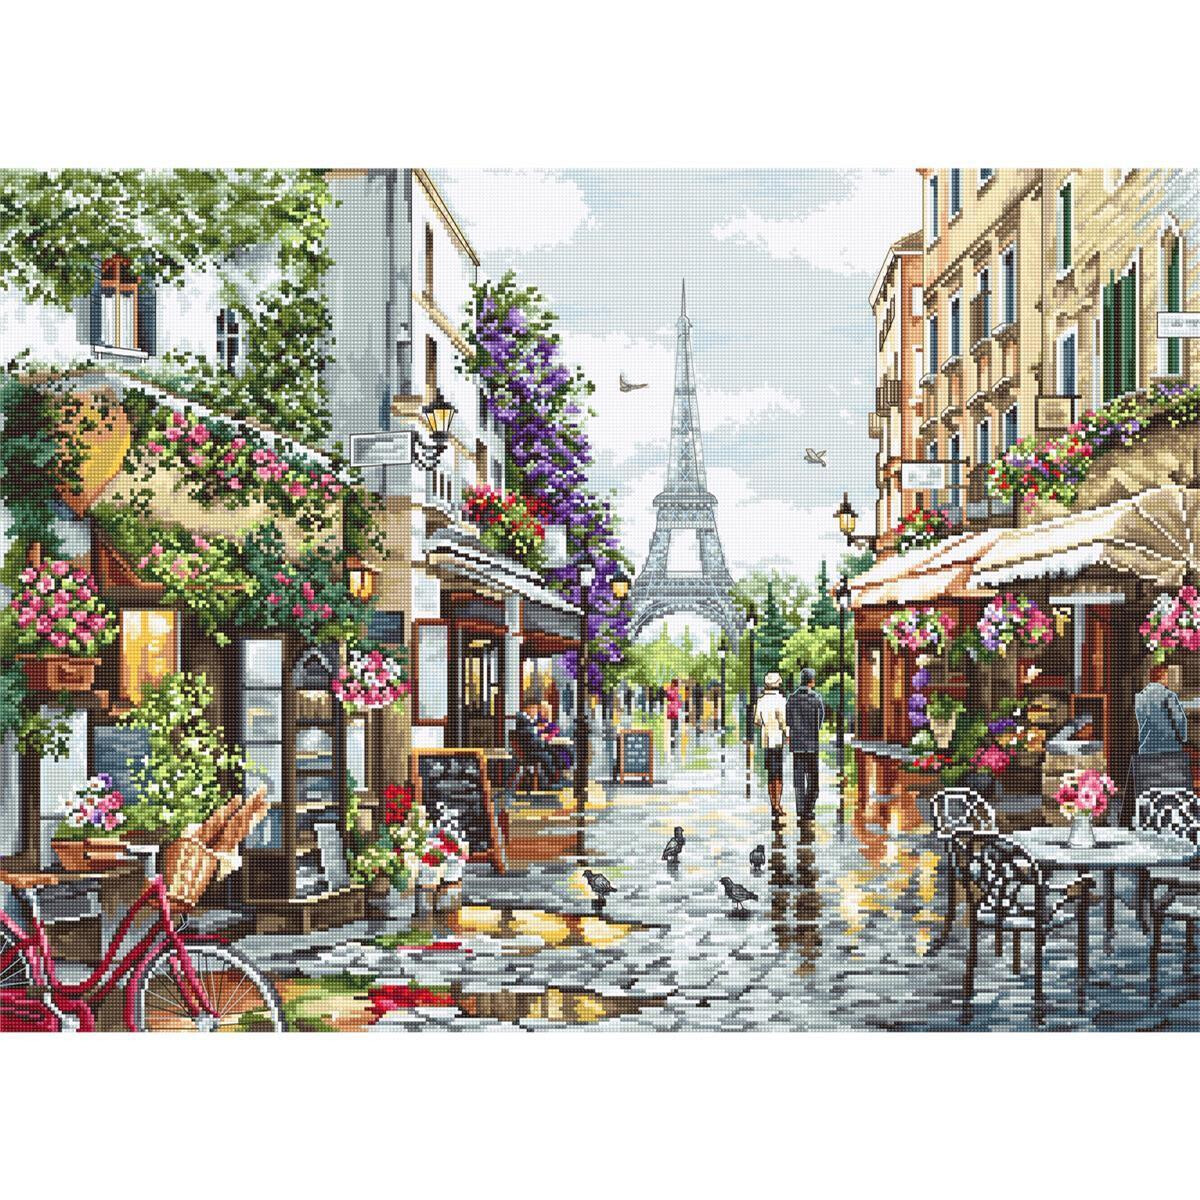 A lively Parisian city street offers cafés, stores...